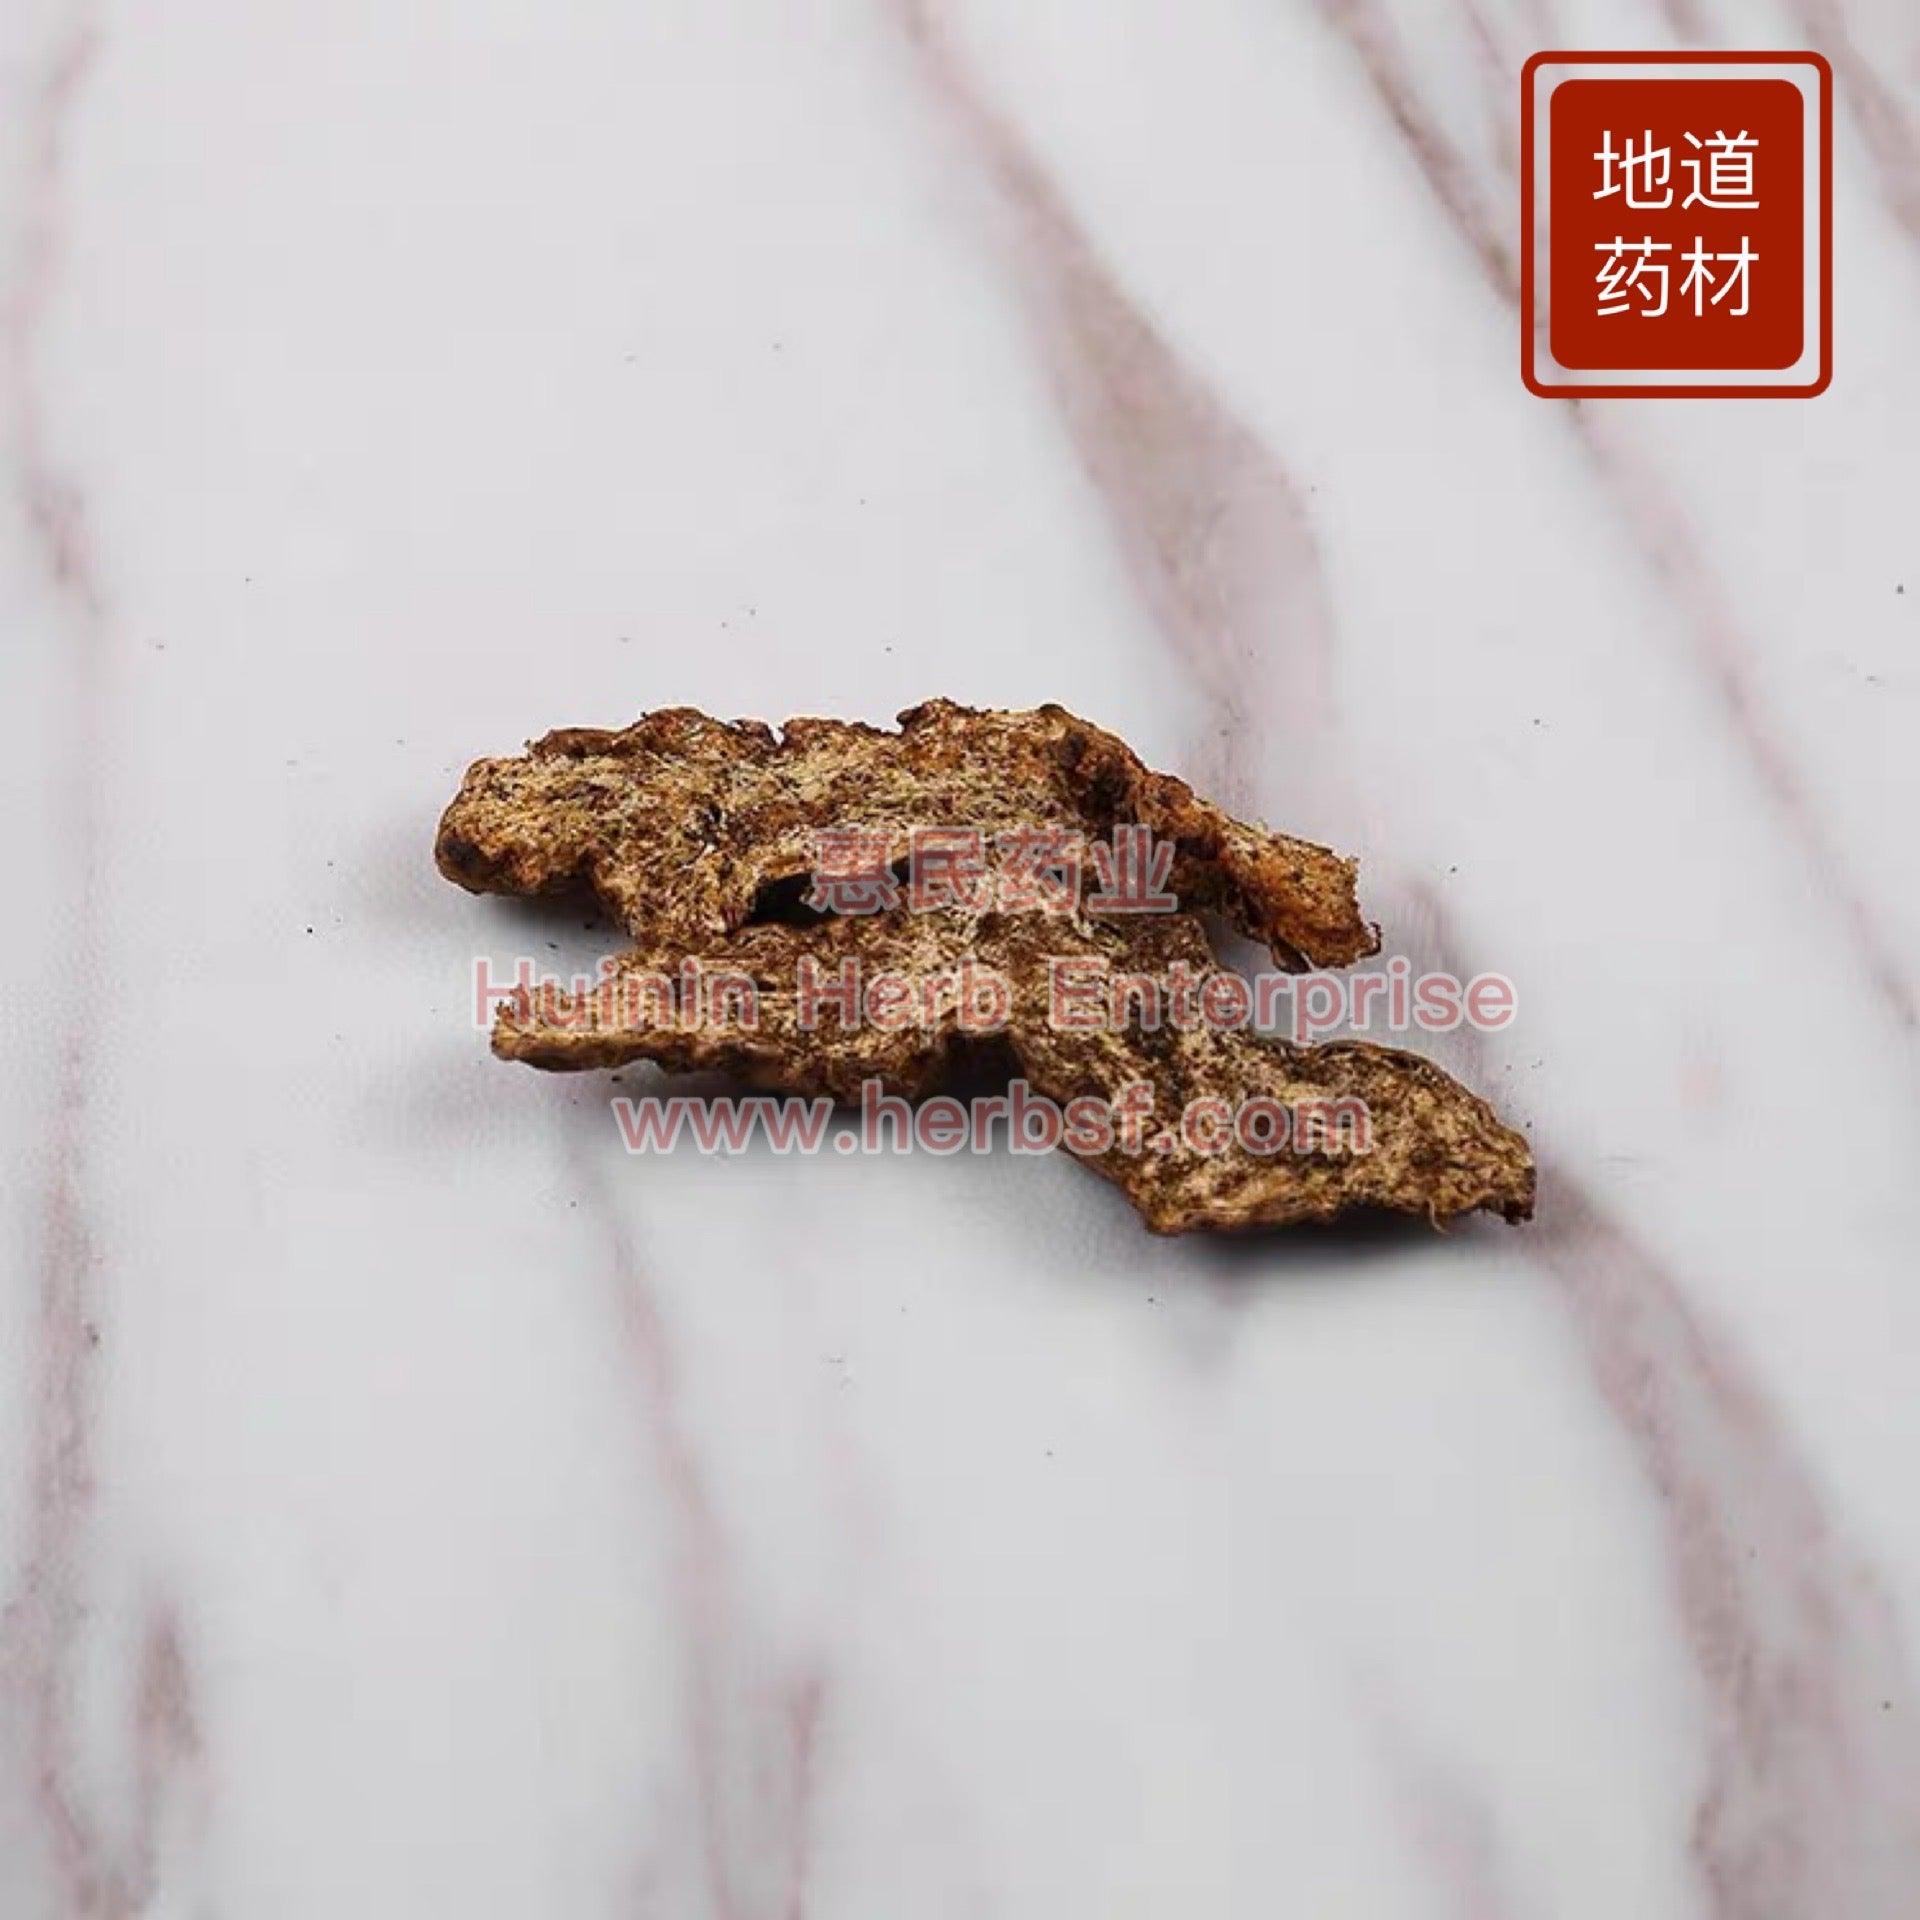 Zhi Cang Zhu (Atractylodes Rhizome) 4oz - Huimin Herb Online, LLC